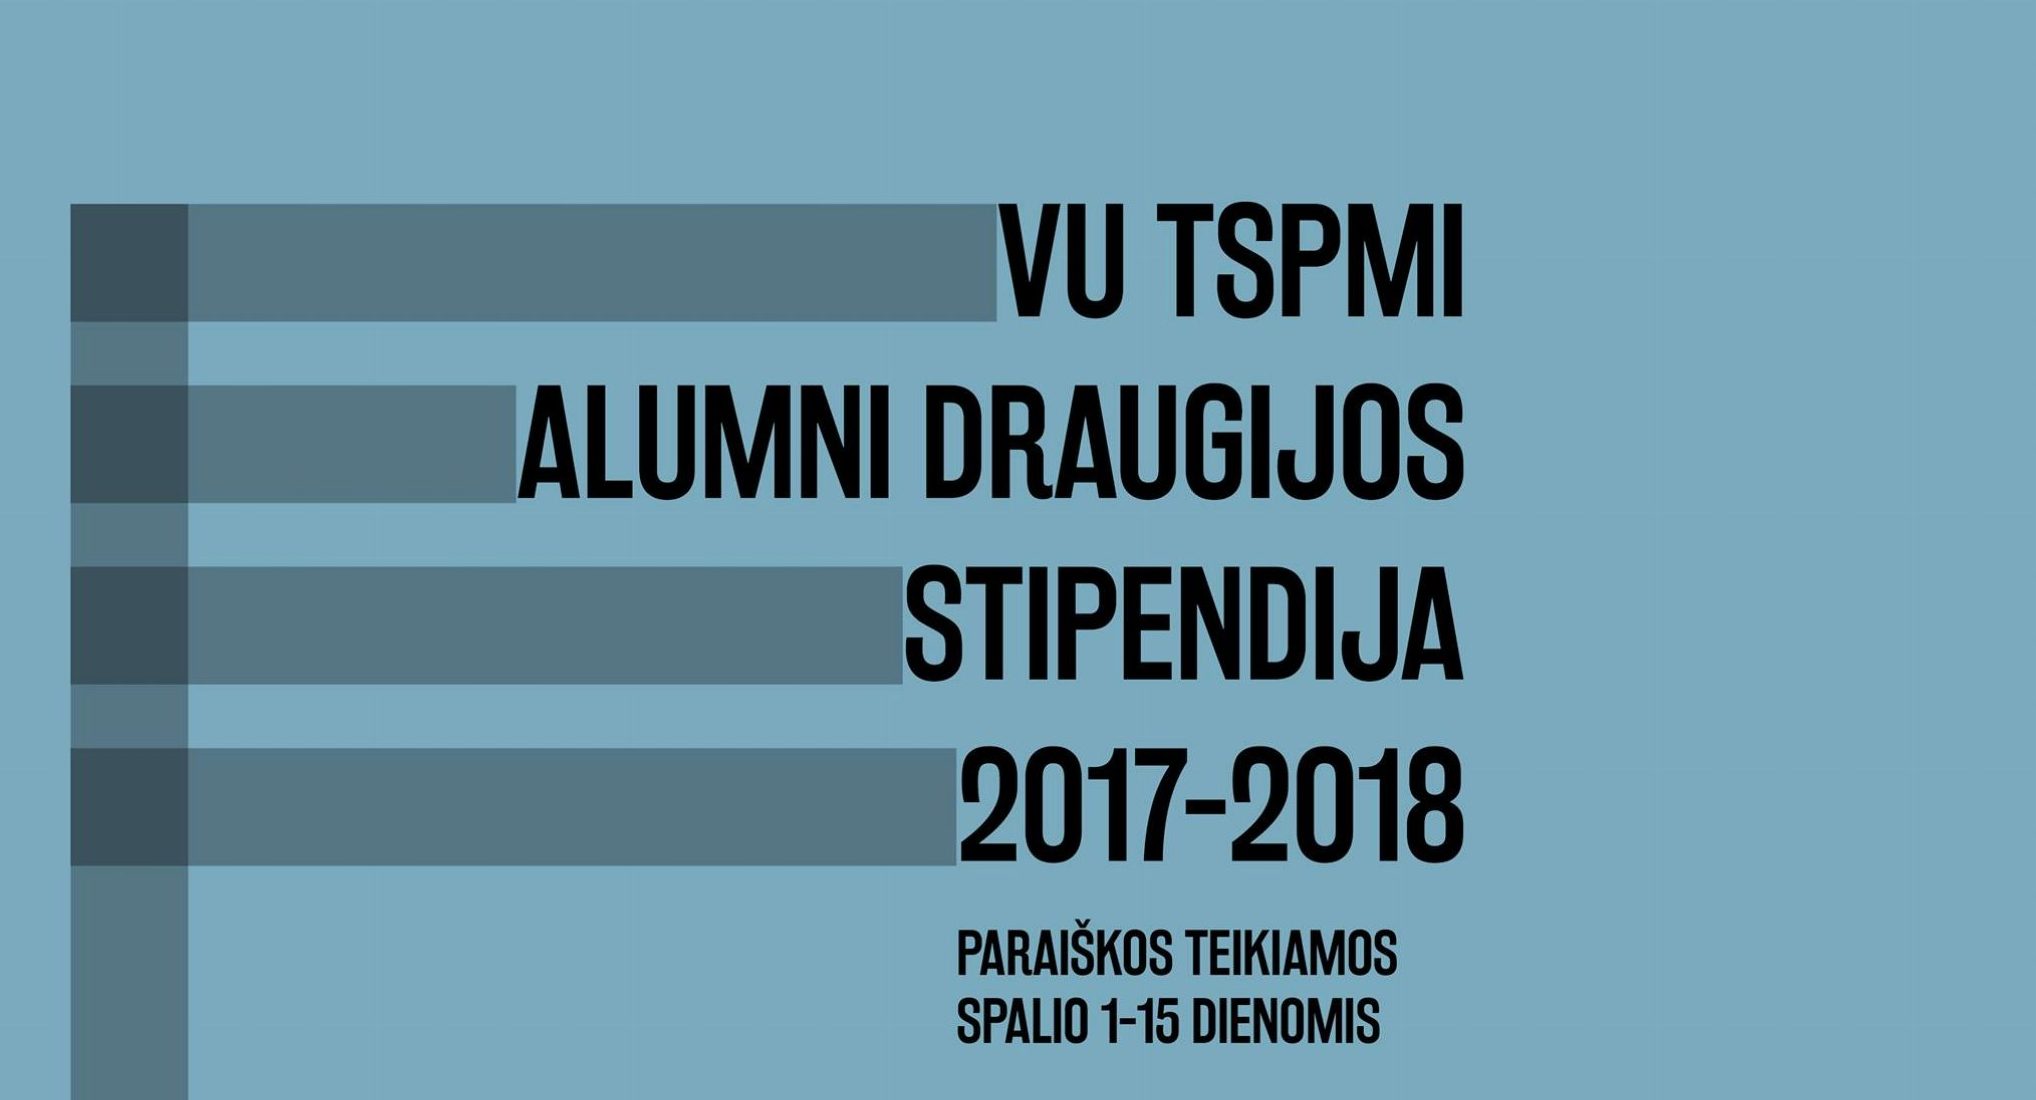 VU TSPMI Alumni draugija skelbia pirmąjį Alumni stipendijos konkursą